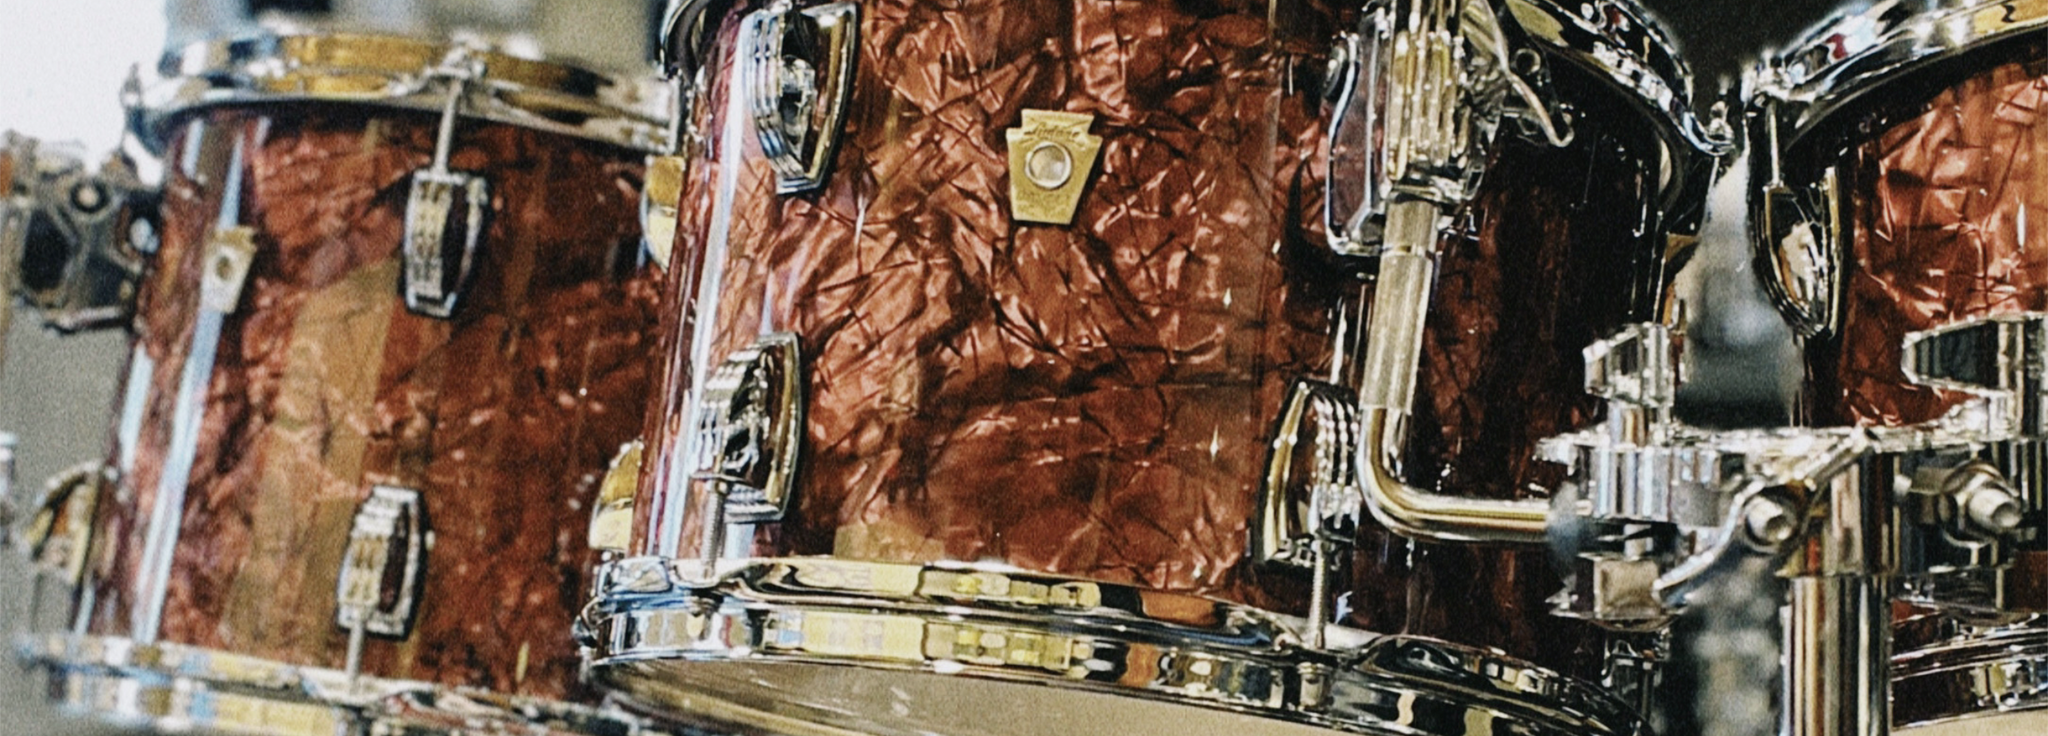 Drum kits drum sets Cincinnati Badges Drum Shop